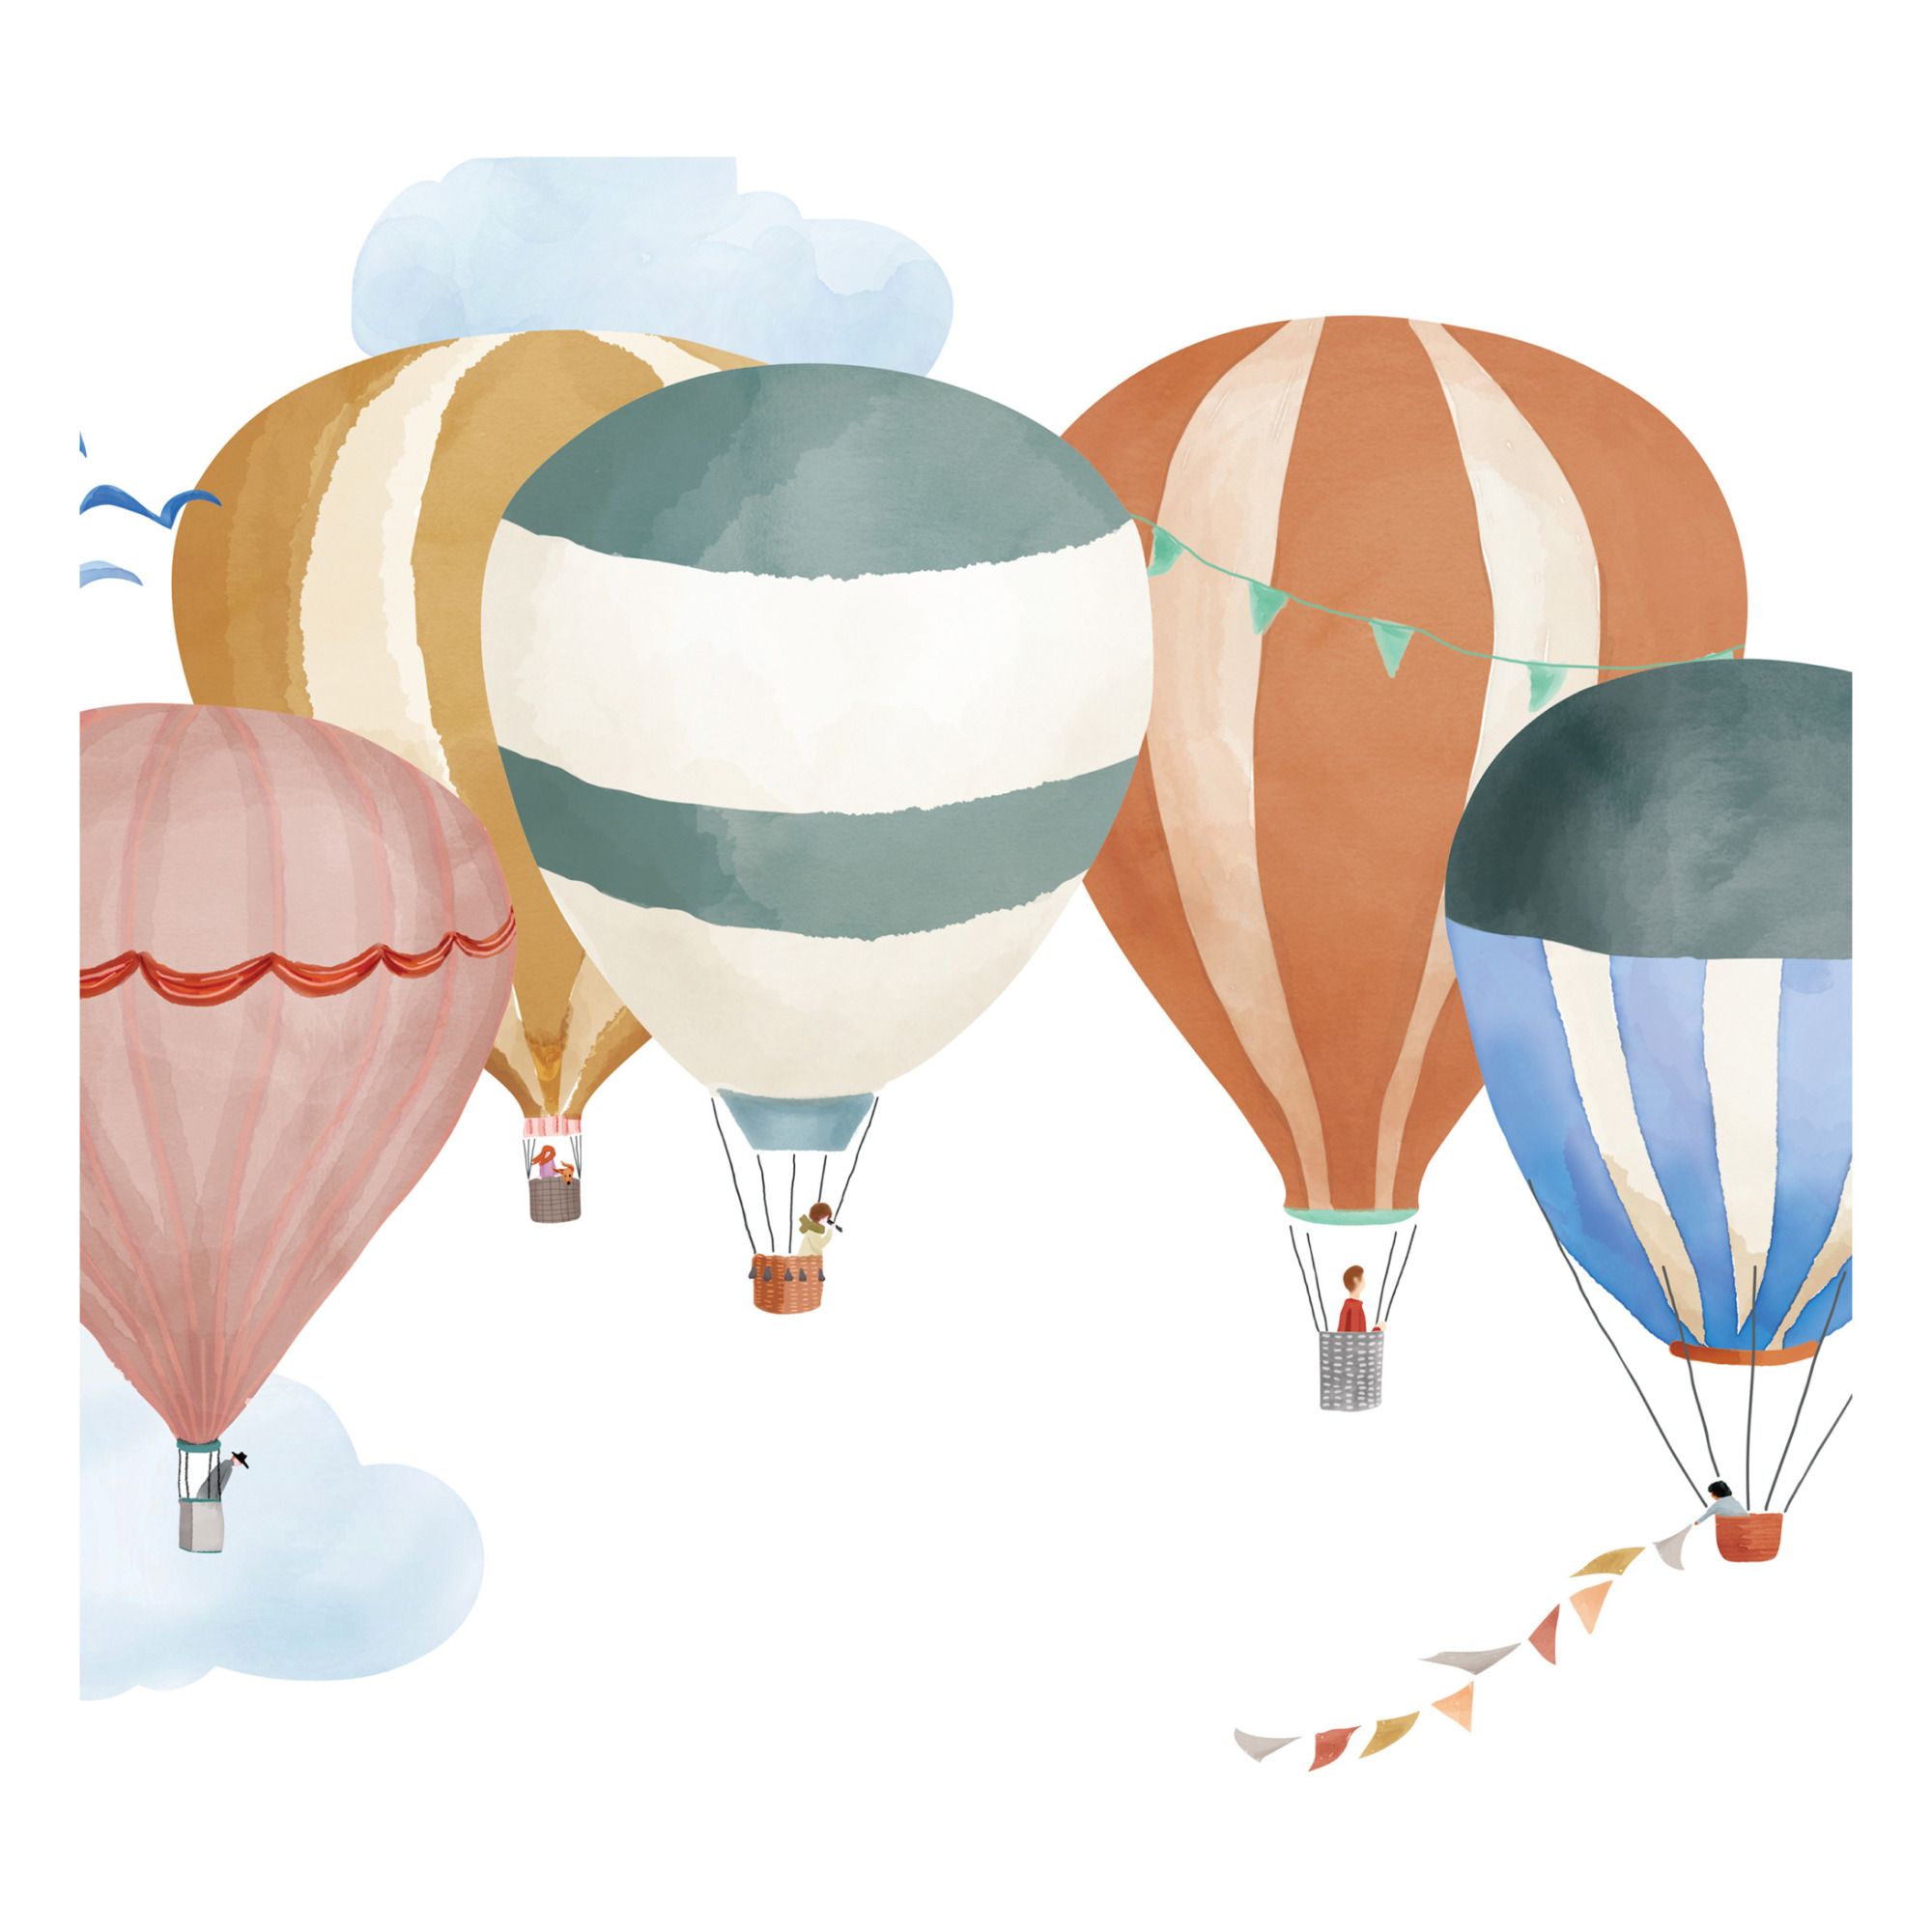 Giant sticker - Hot air baloons in watercolour - Mimi'lou Shop